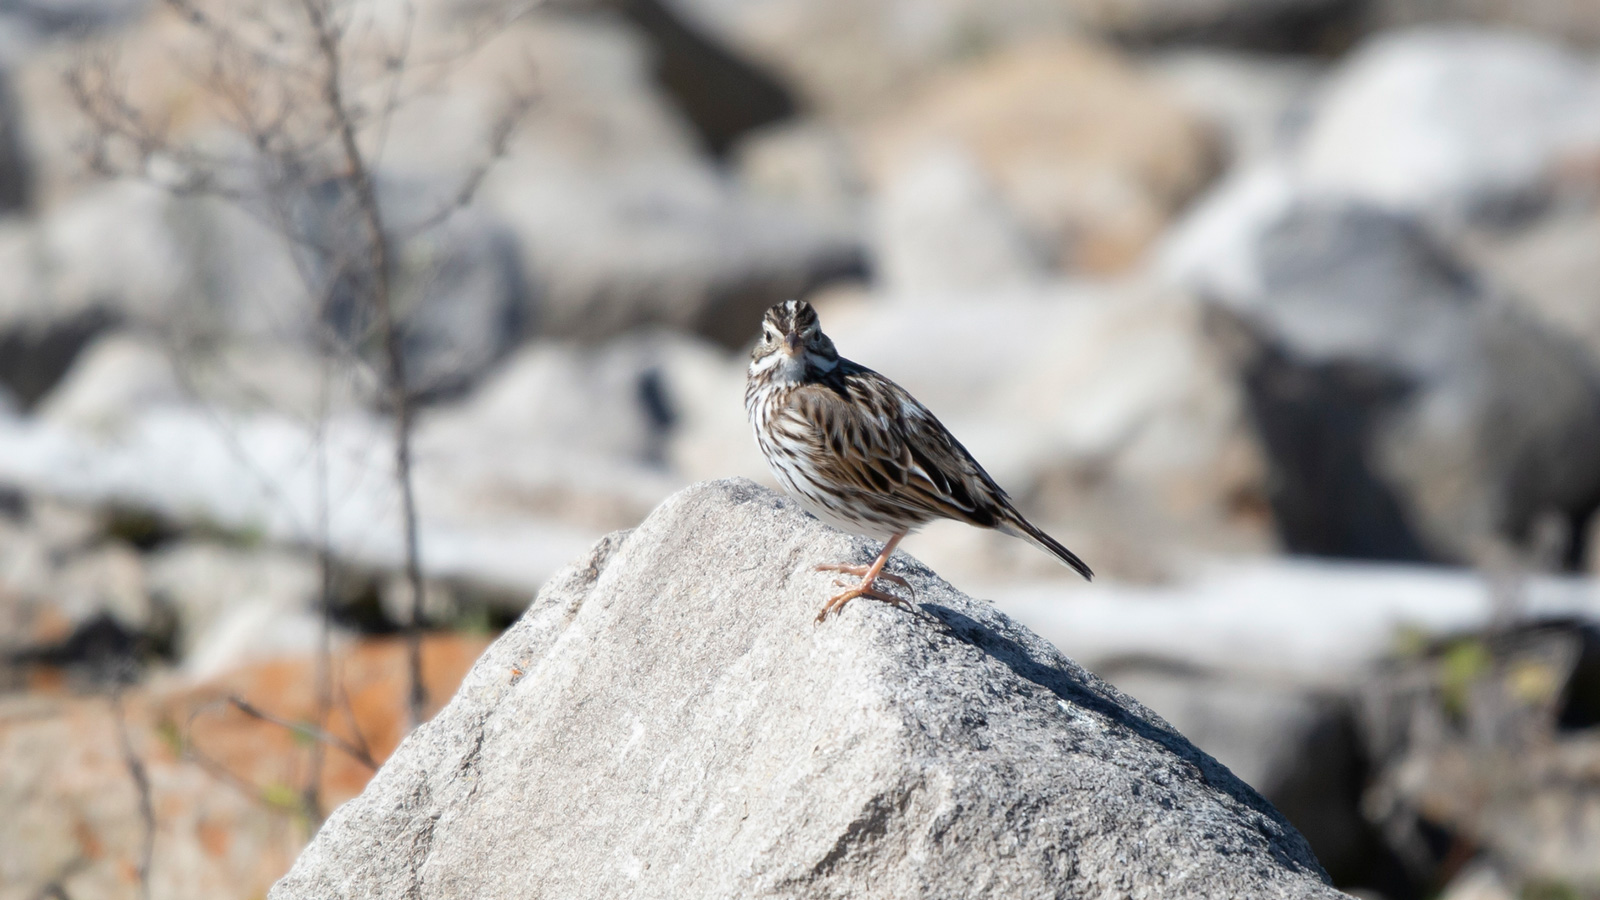 Vesper sparrow standing on stone